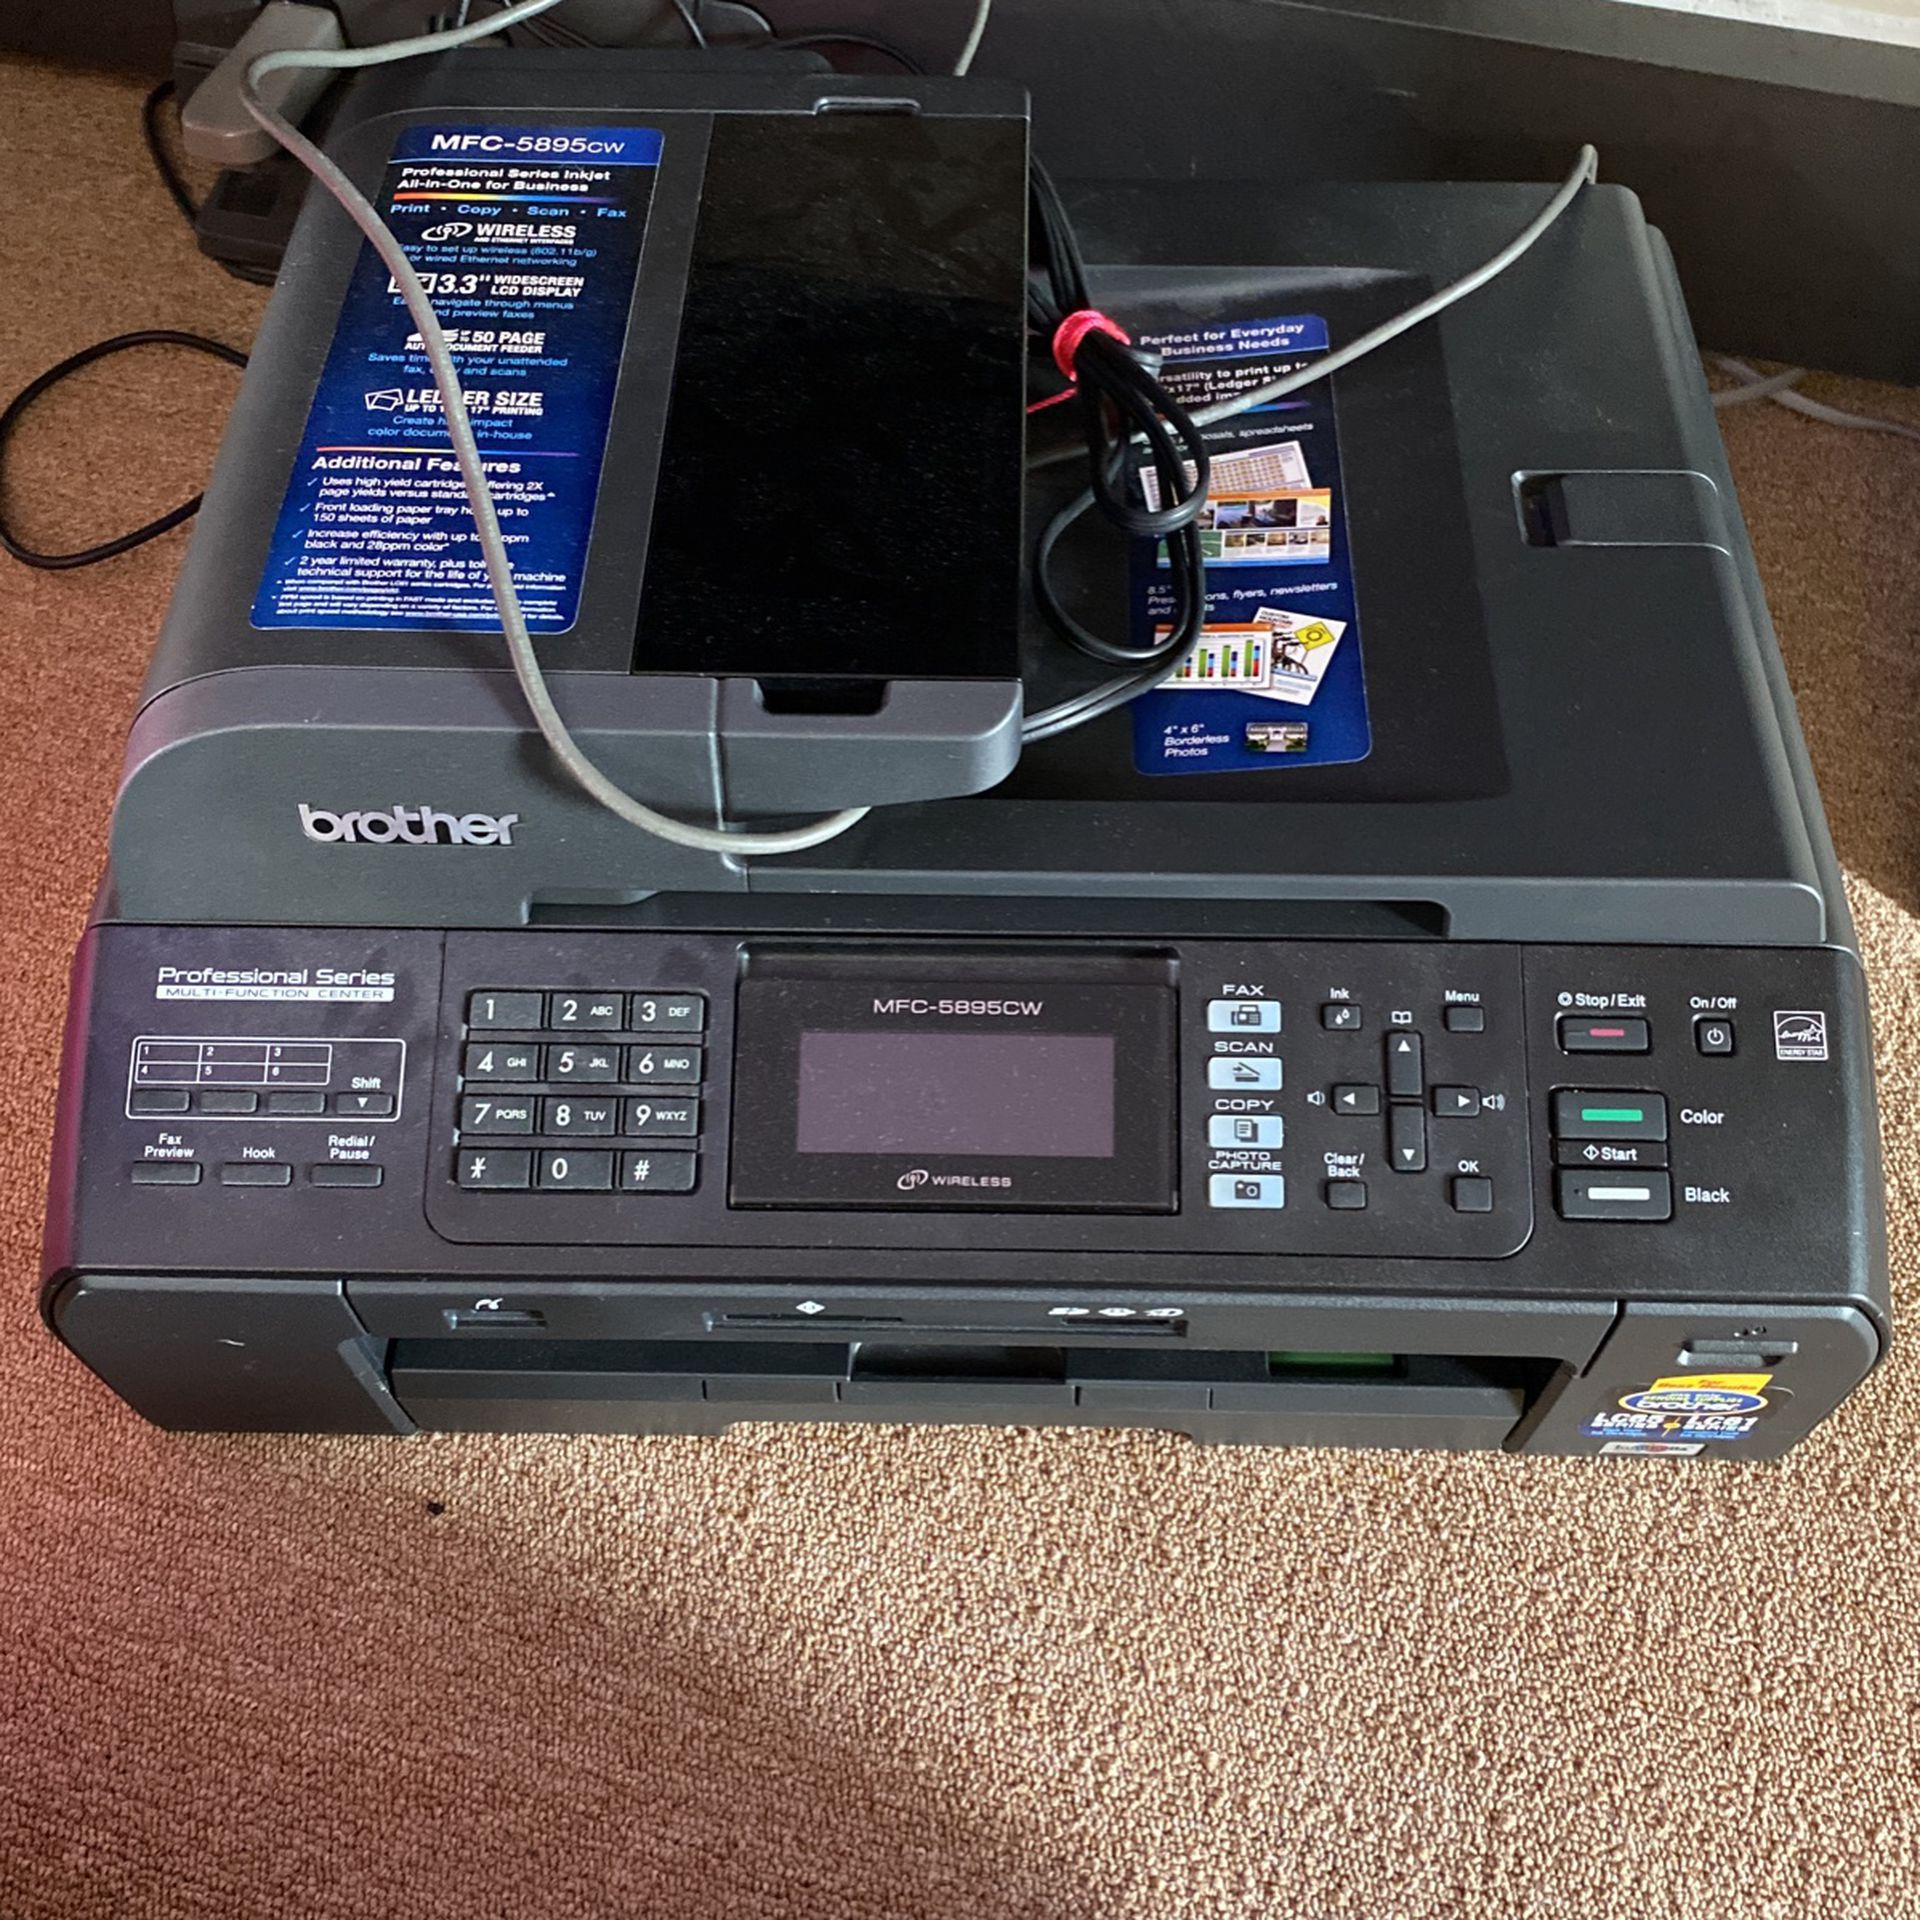 Brother Printer, Scam, Copy, Fax